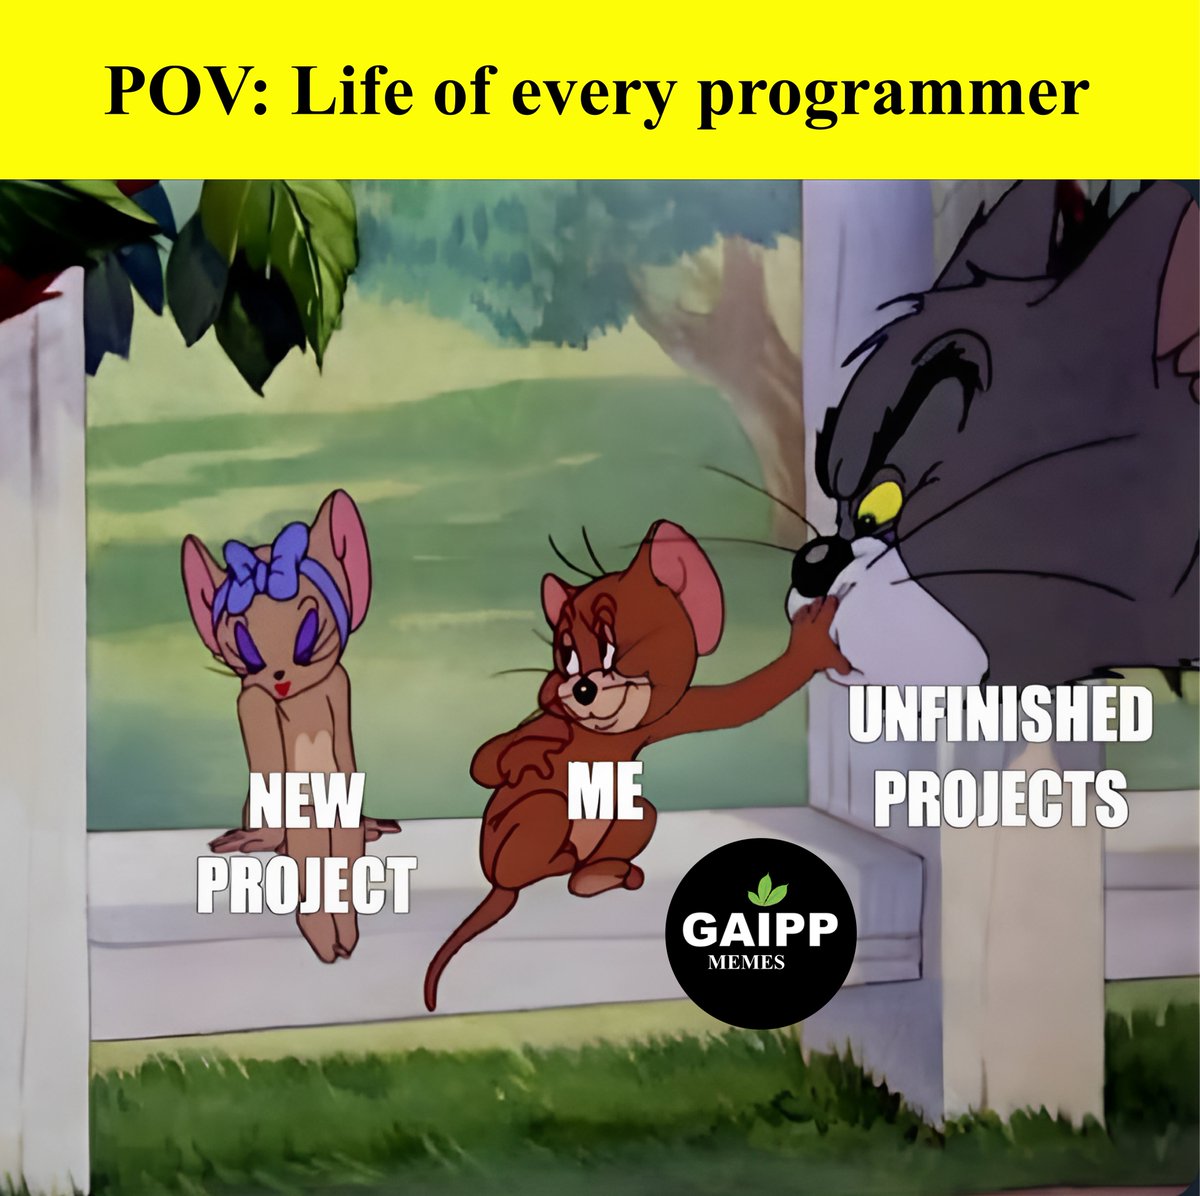 #Itmemes #itfun #programmer #programmerlife #programmermeme #gaipp #gaippmeme #projects